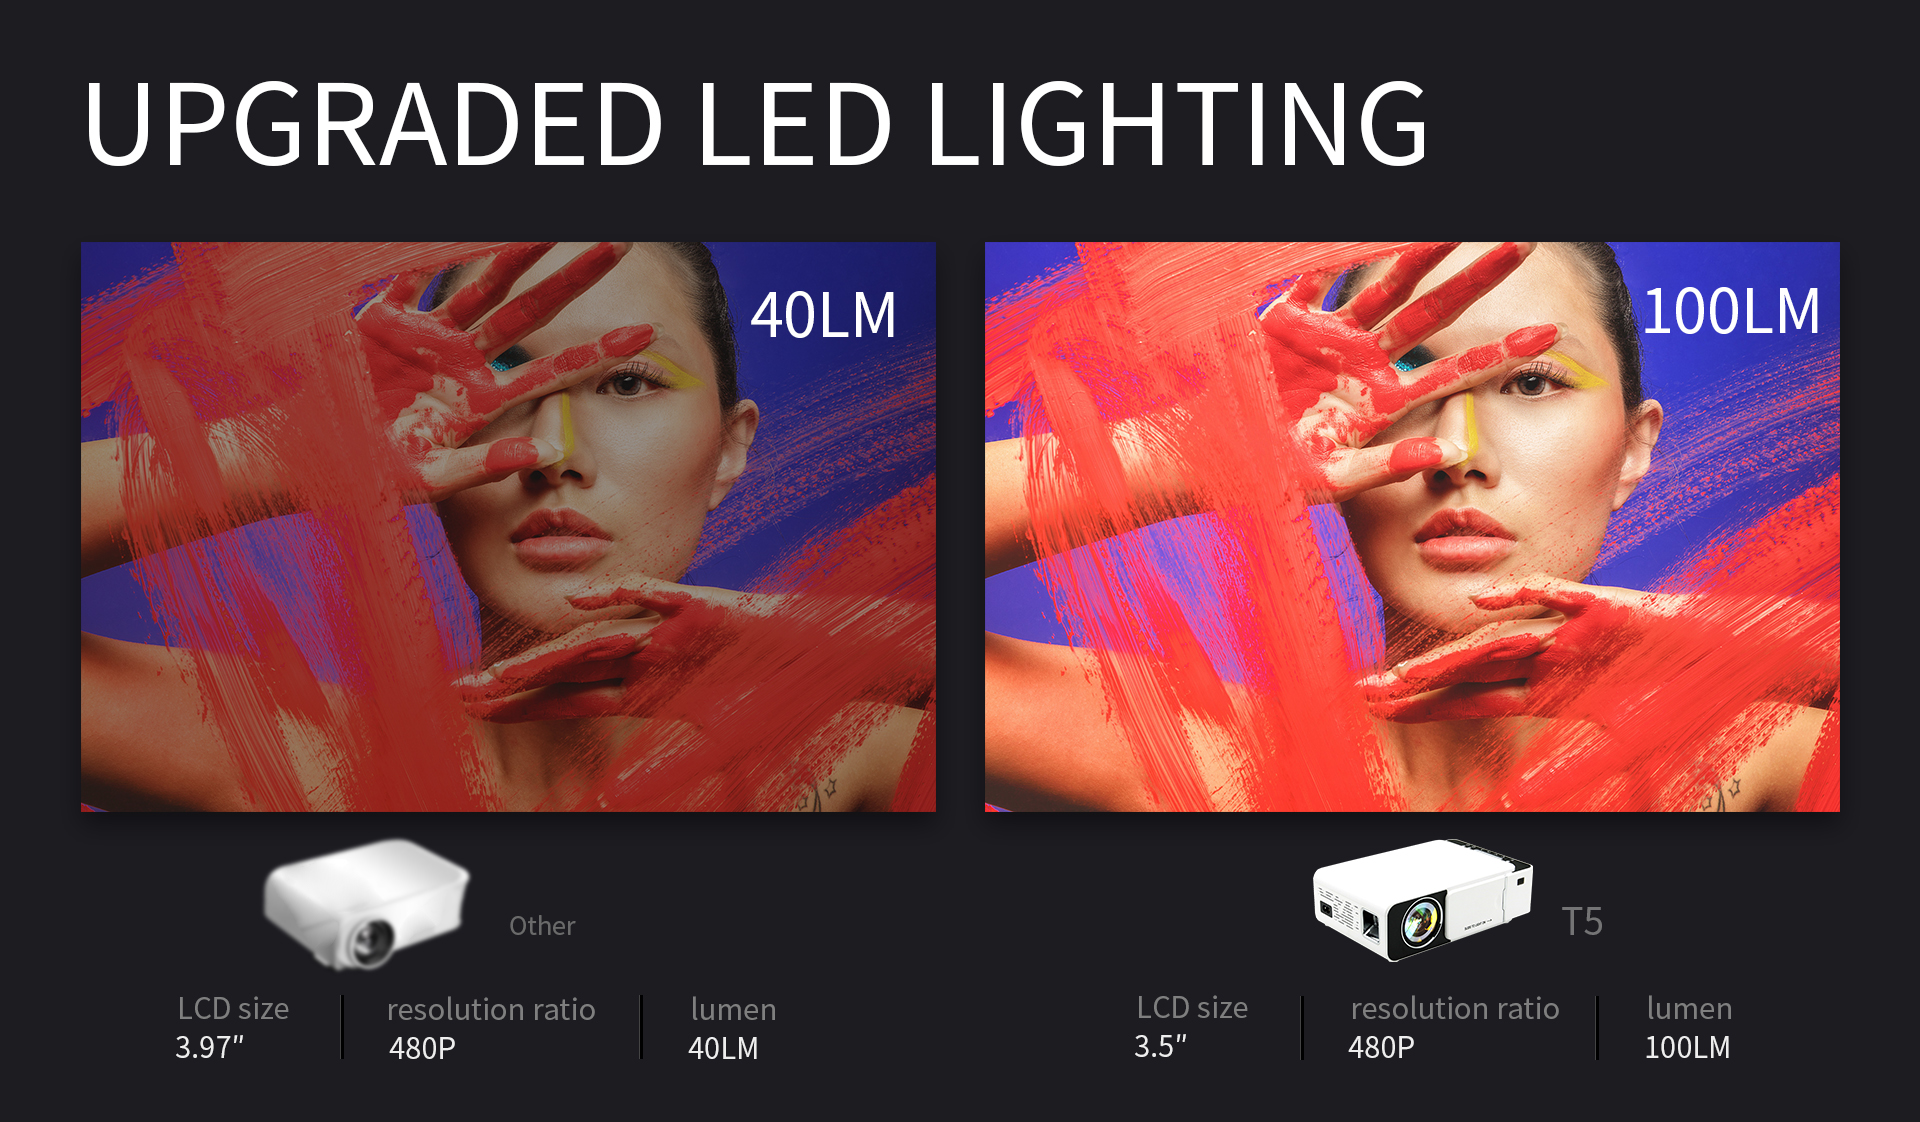 LED Lamp Smart 4K HD Home Cinema Native 1080p Digital Mini LCD T5 Projector 